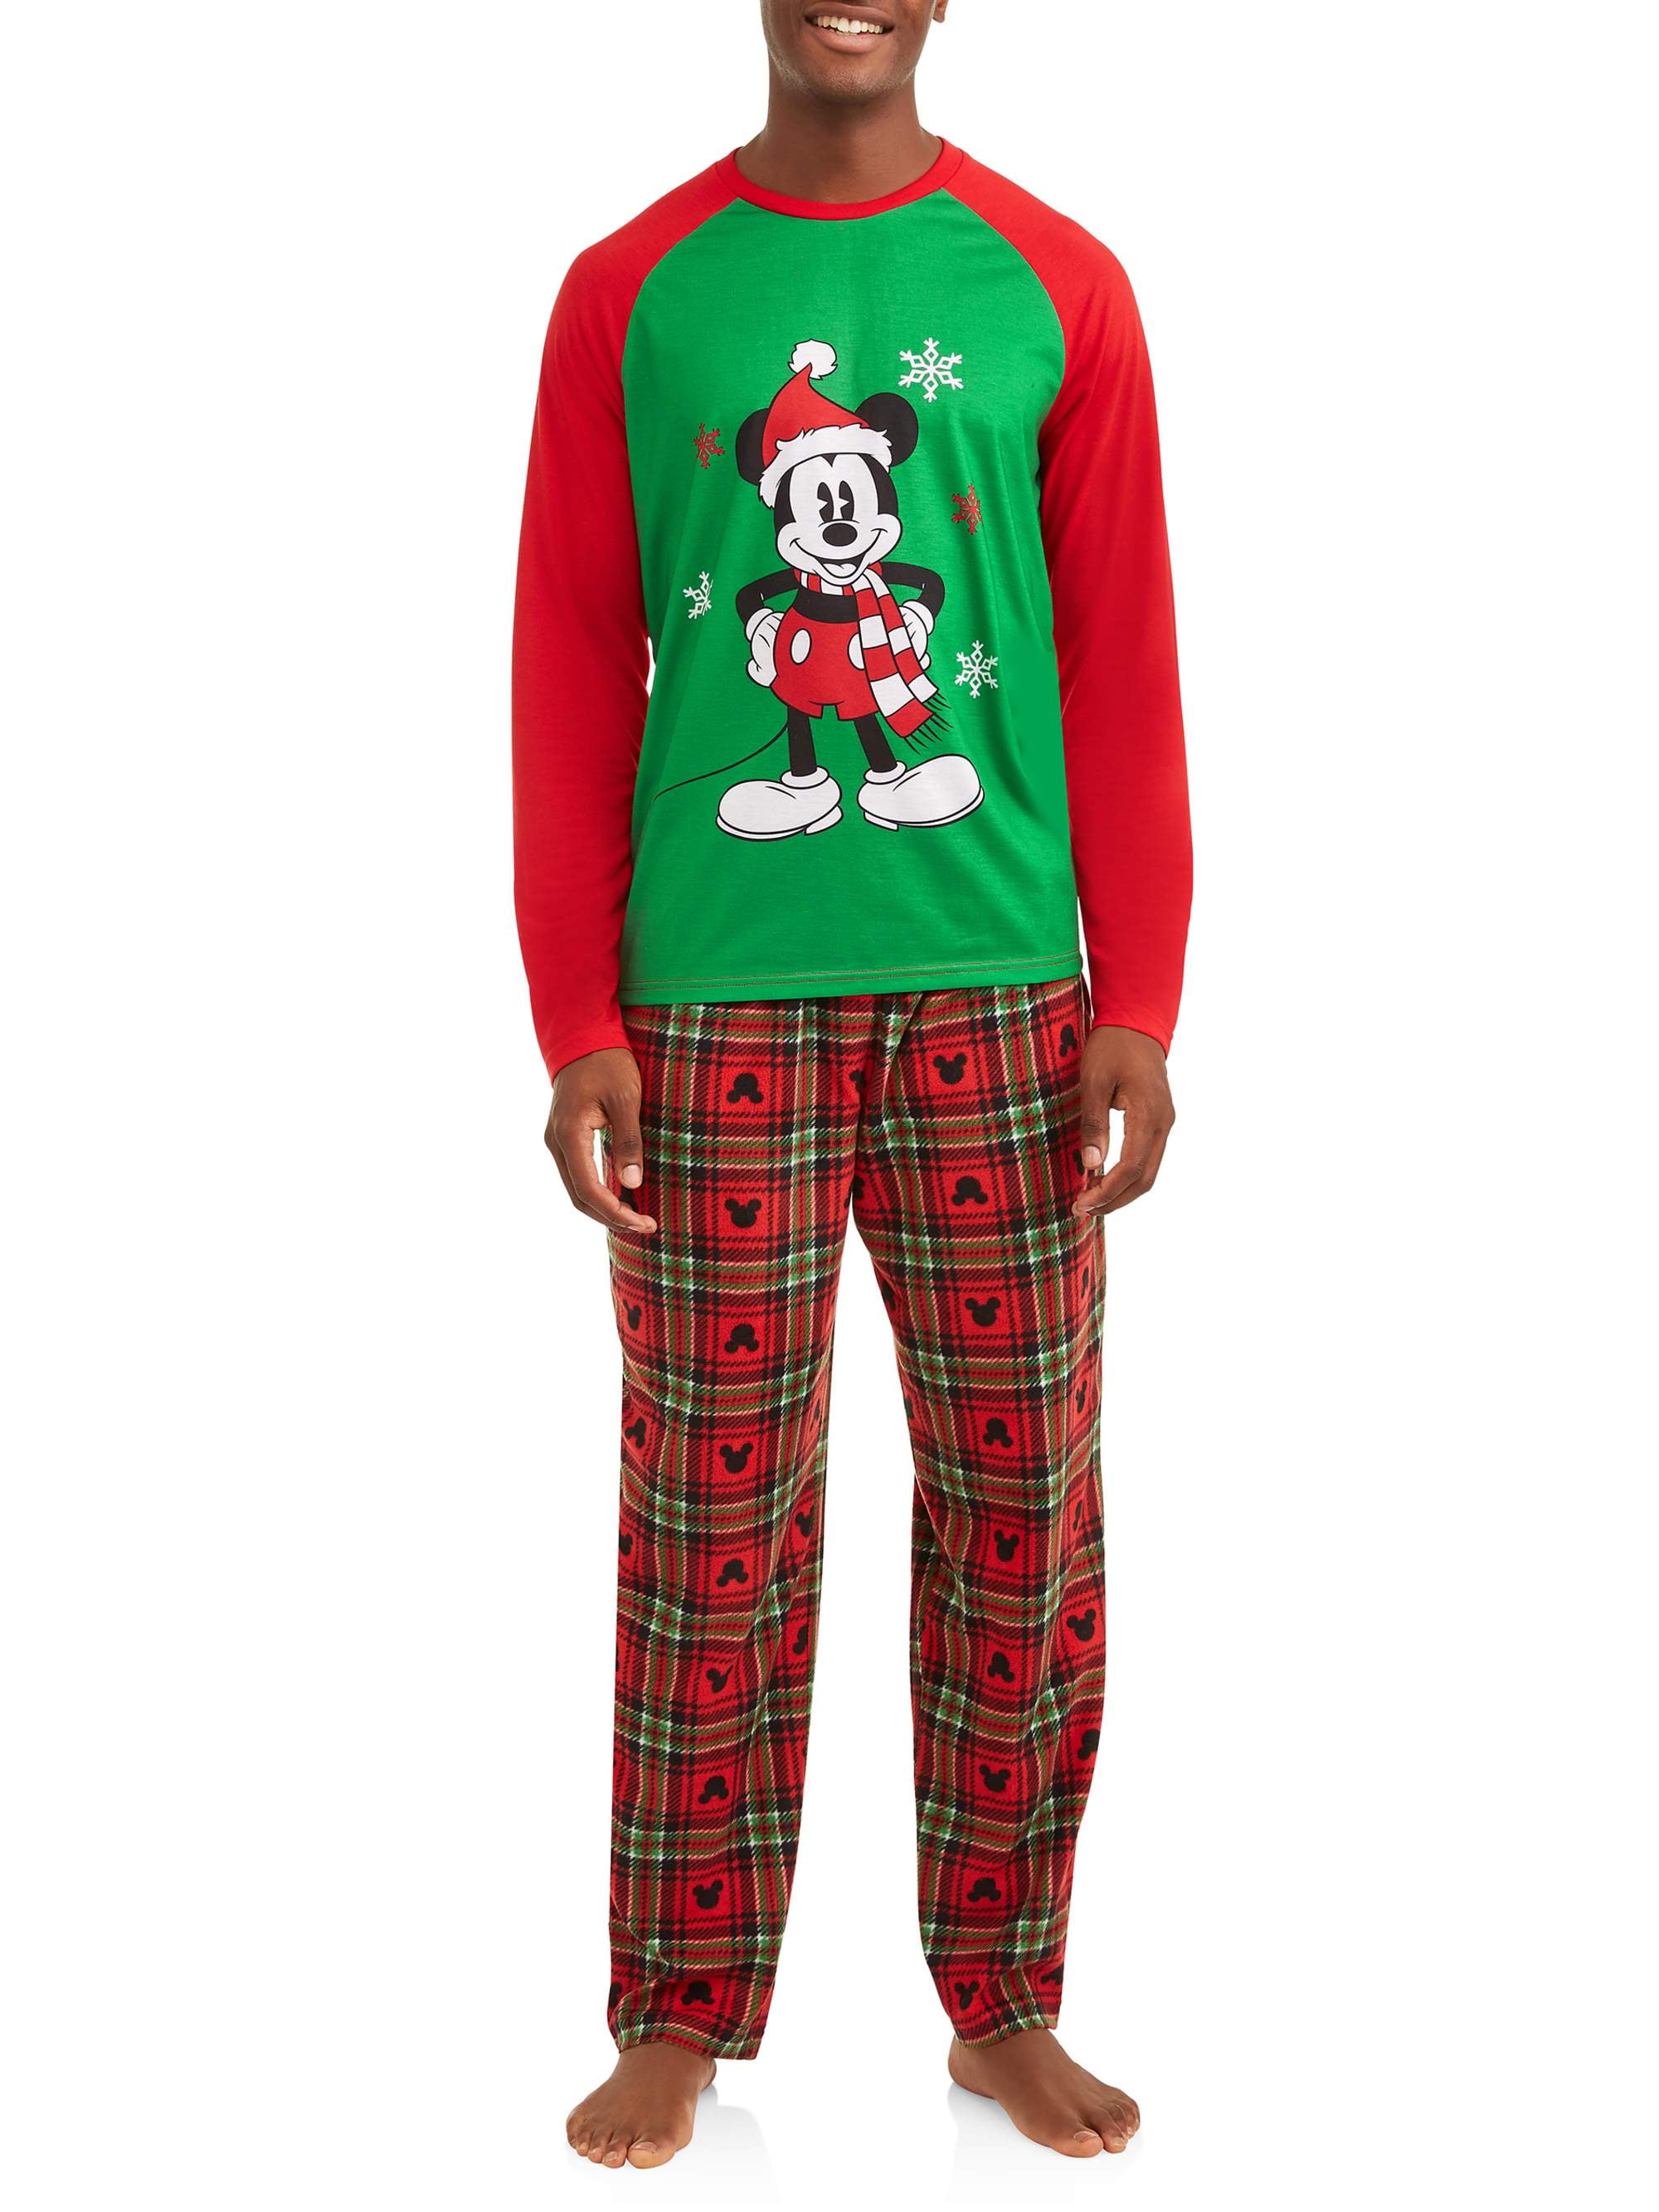 Disney Mickey Mouse Men's Holiday Family Sleep Pajamas, 2-Piece Set 